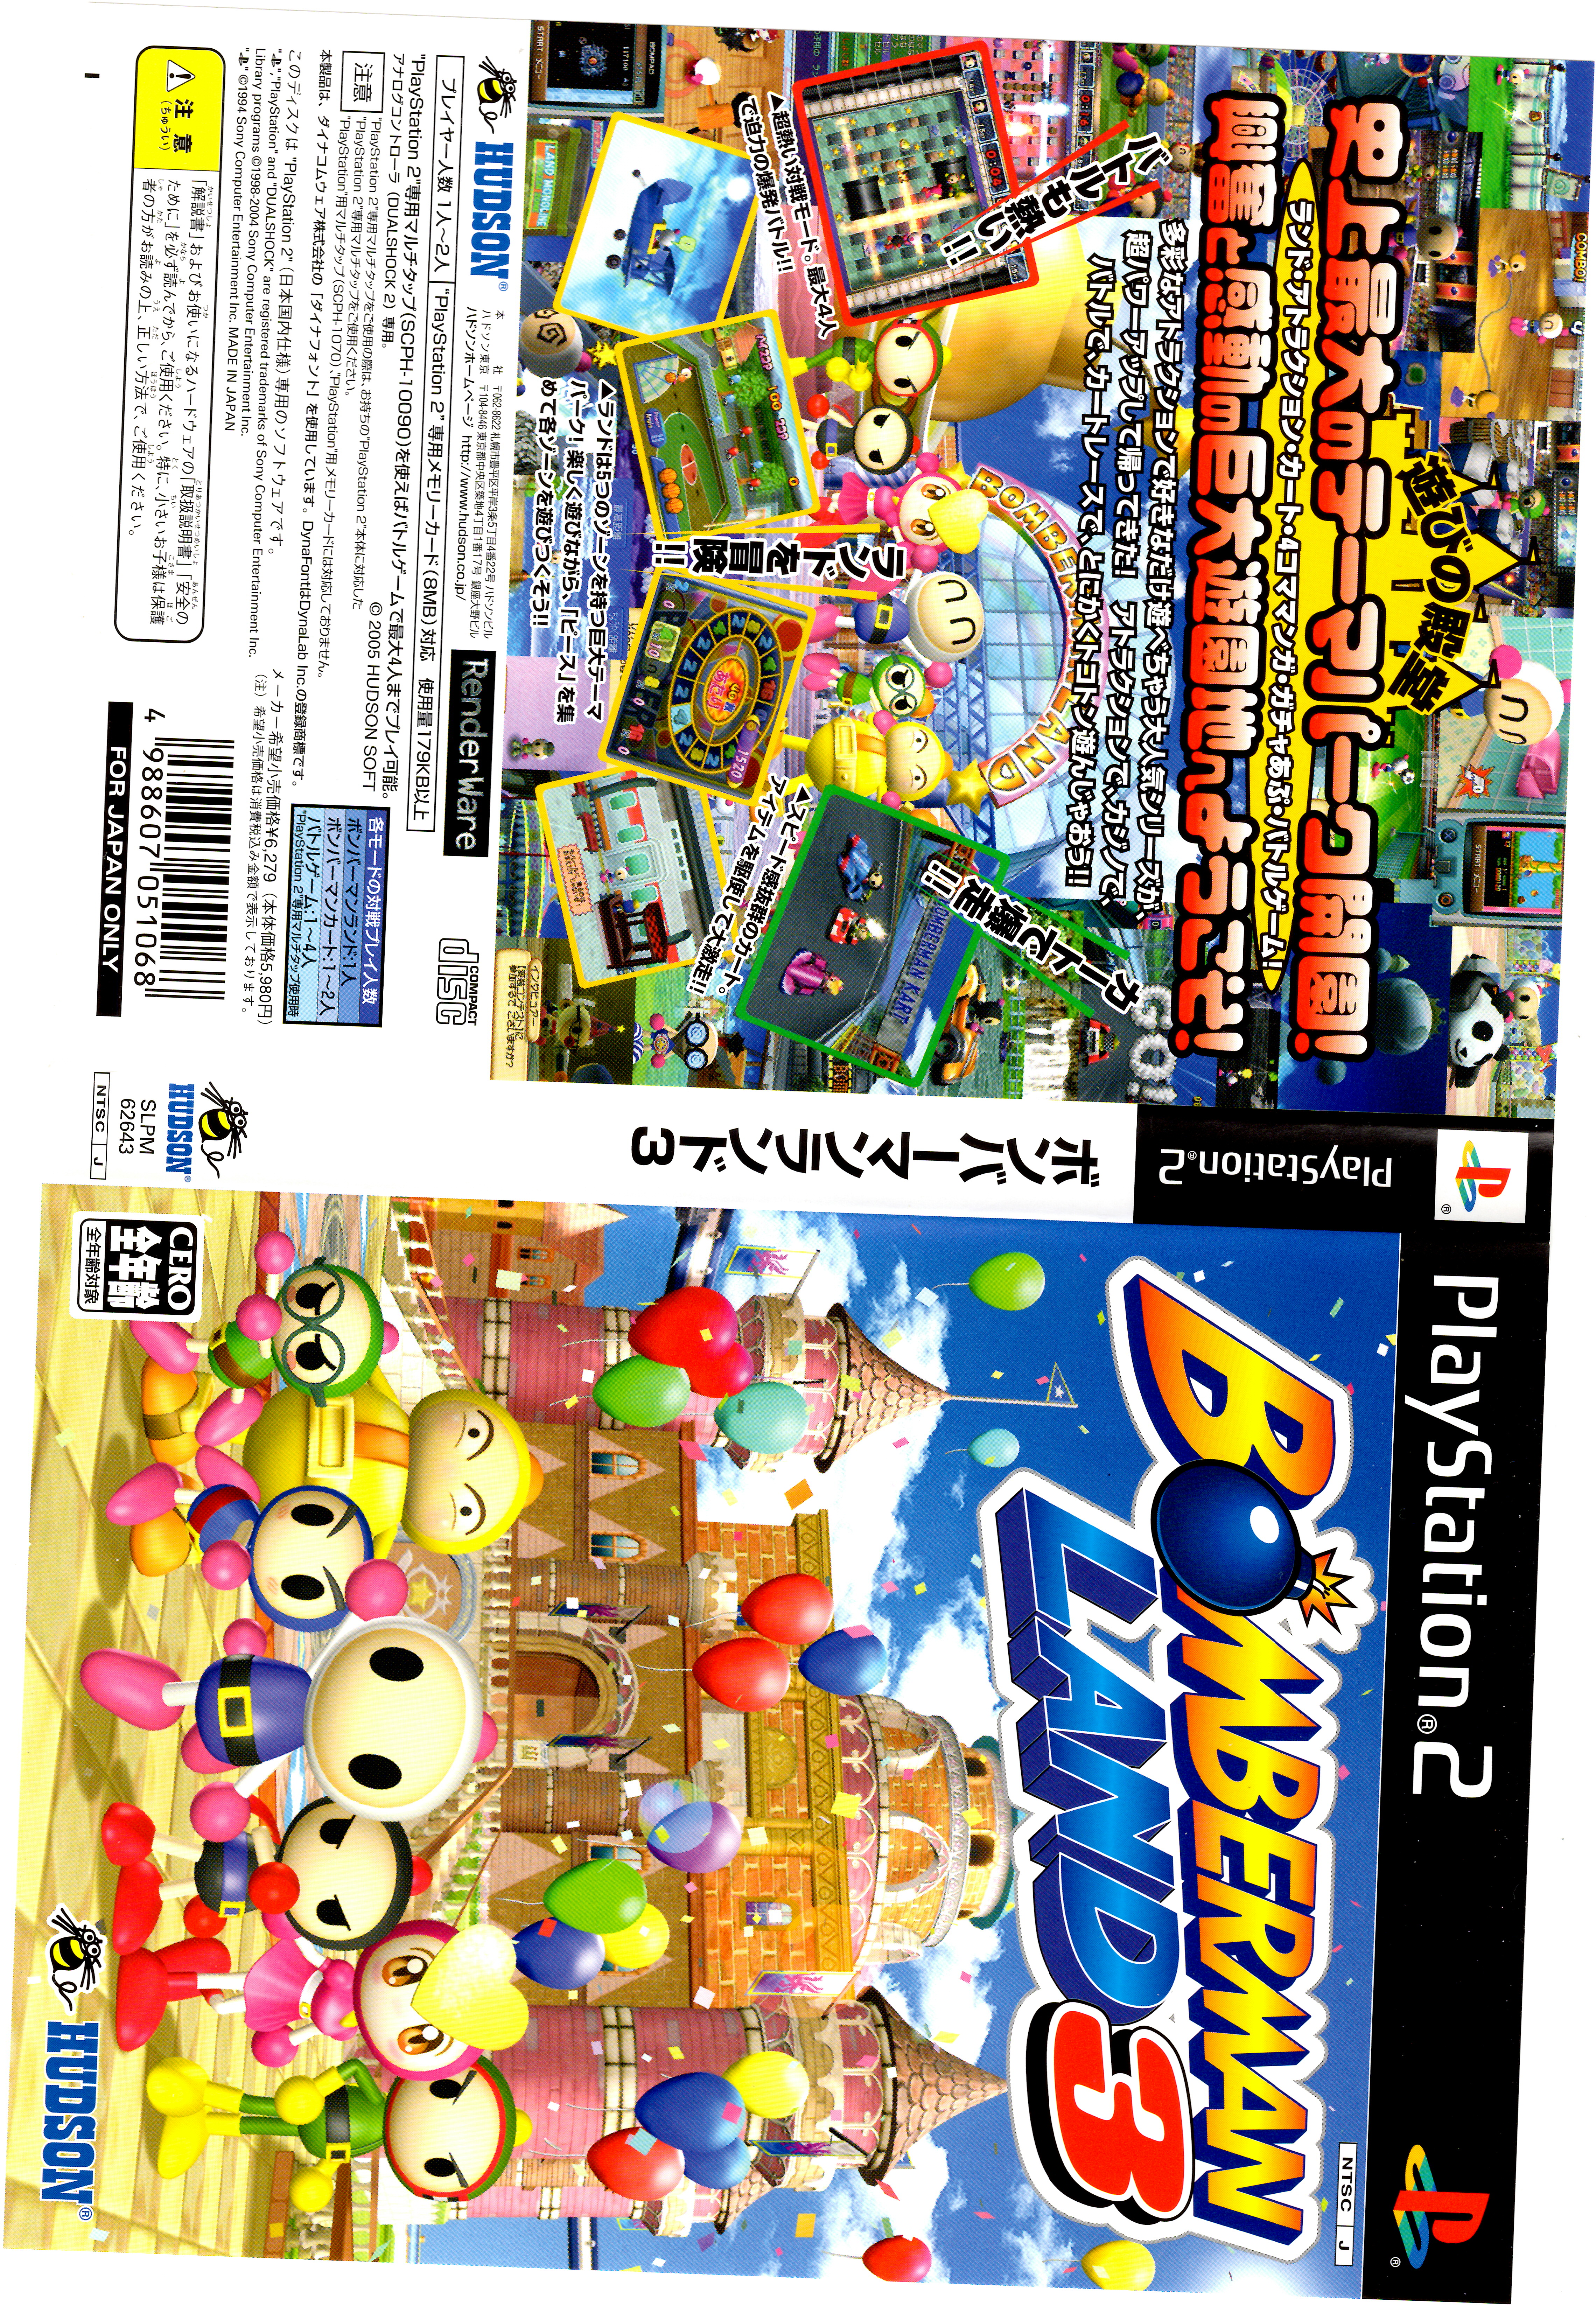 Bomberman Land 3 (PS2, JP) - Cover Art, Disc, and Manual : Free